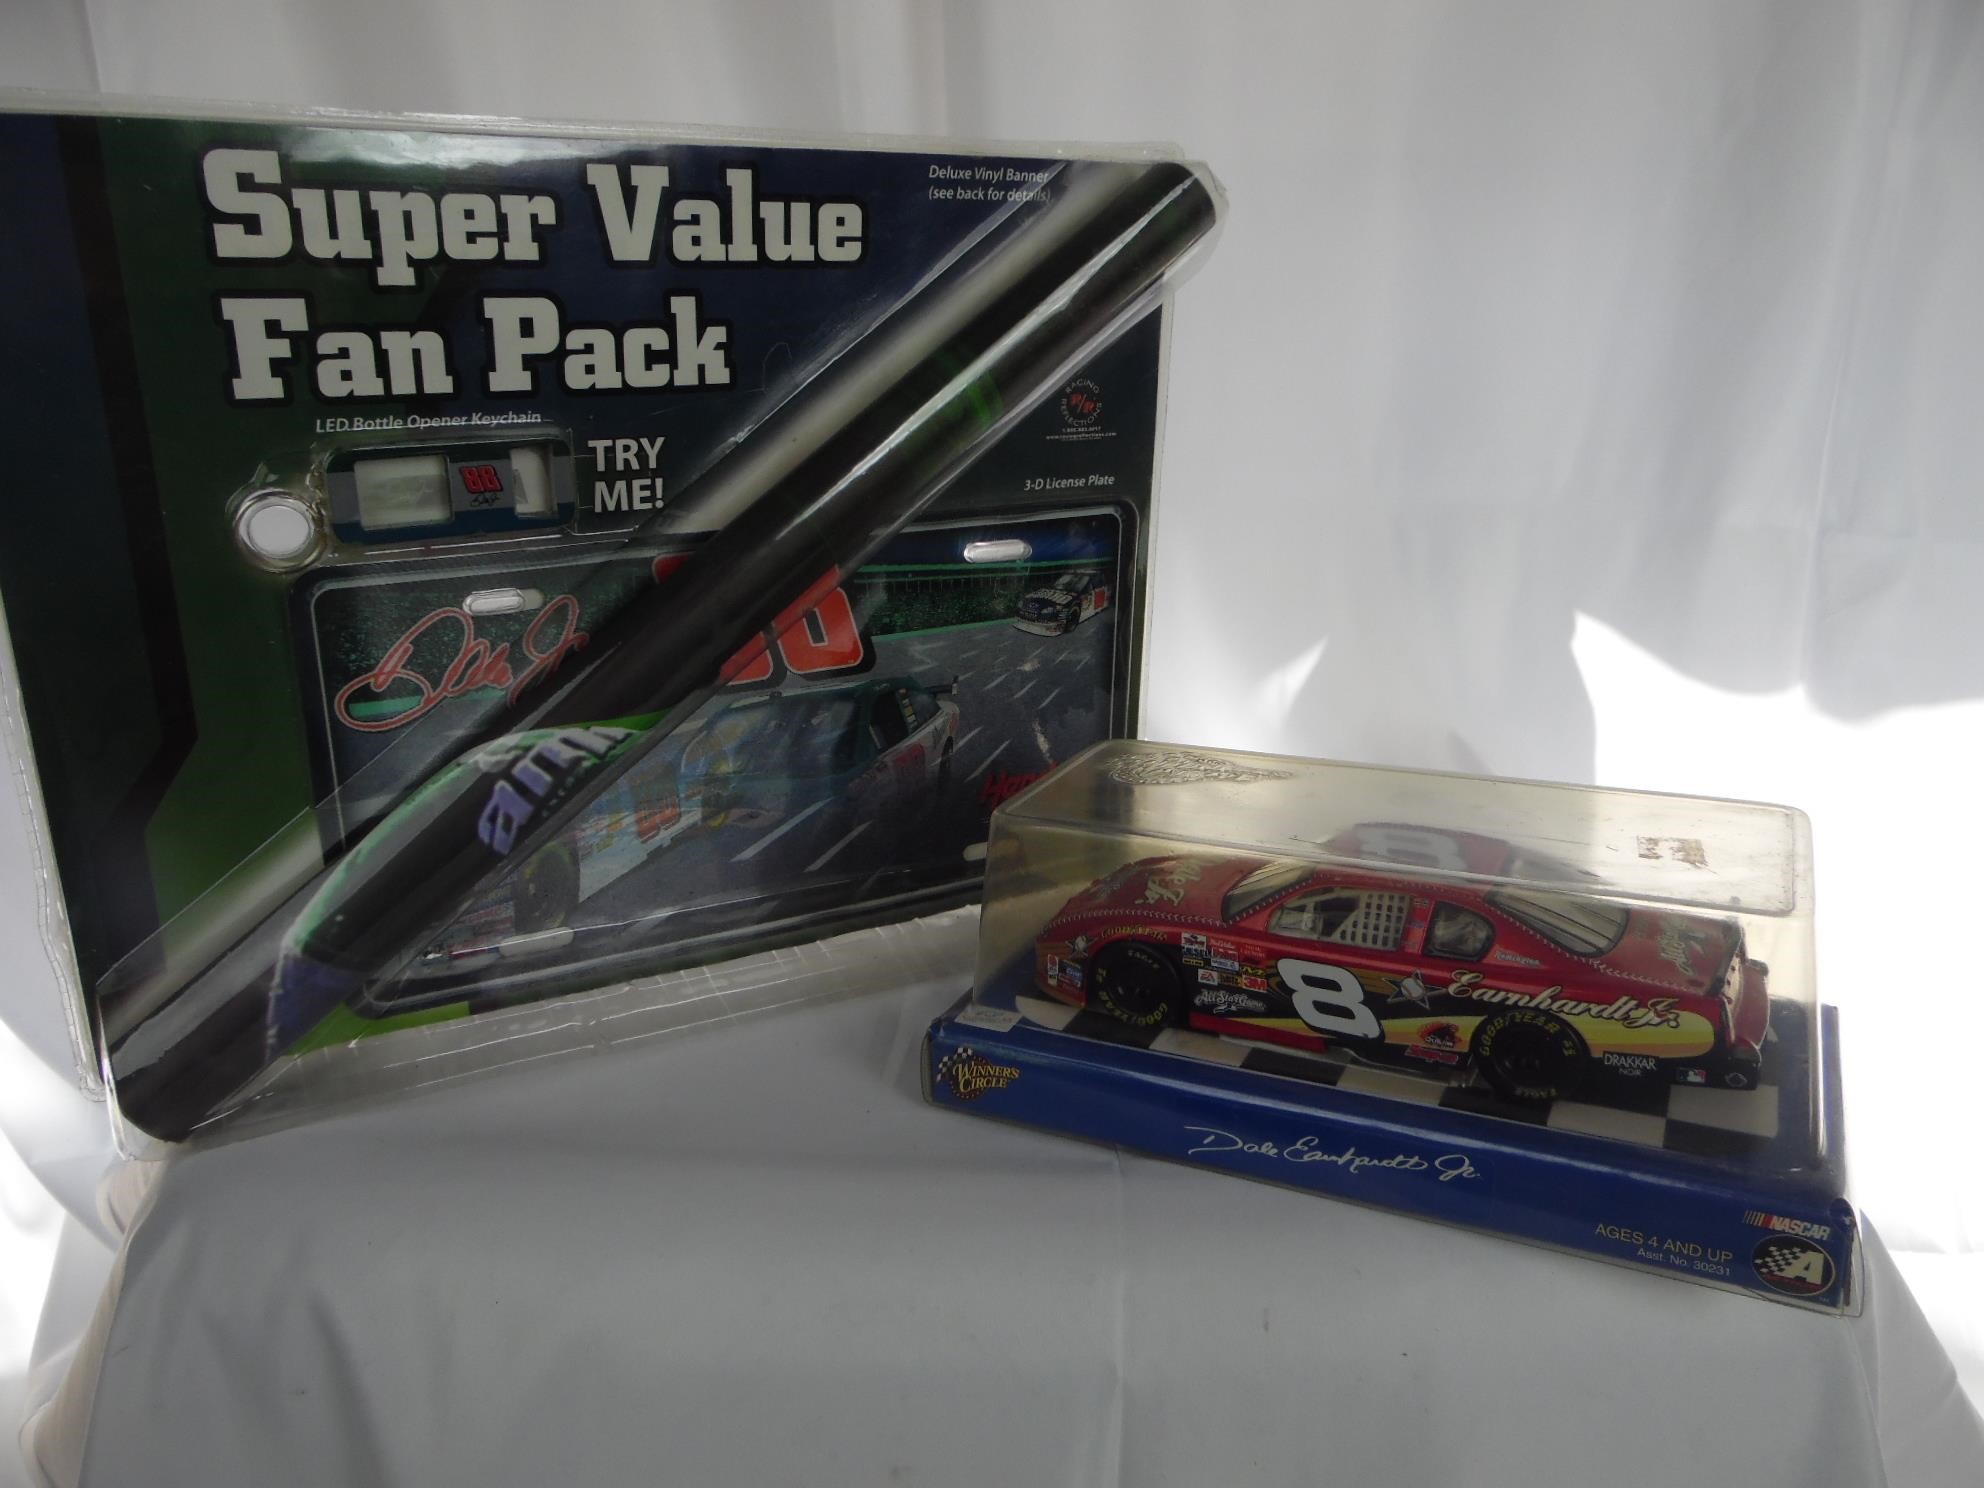 NASCAR and NHRA Memorabilia Auction